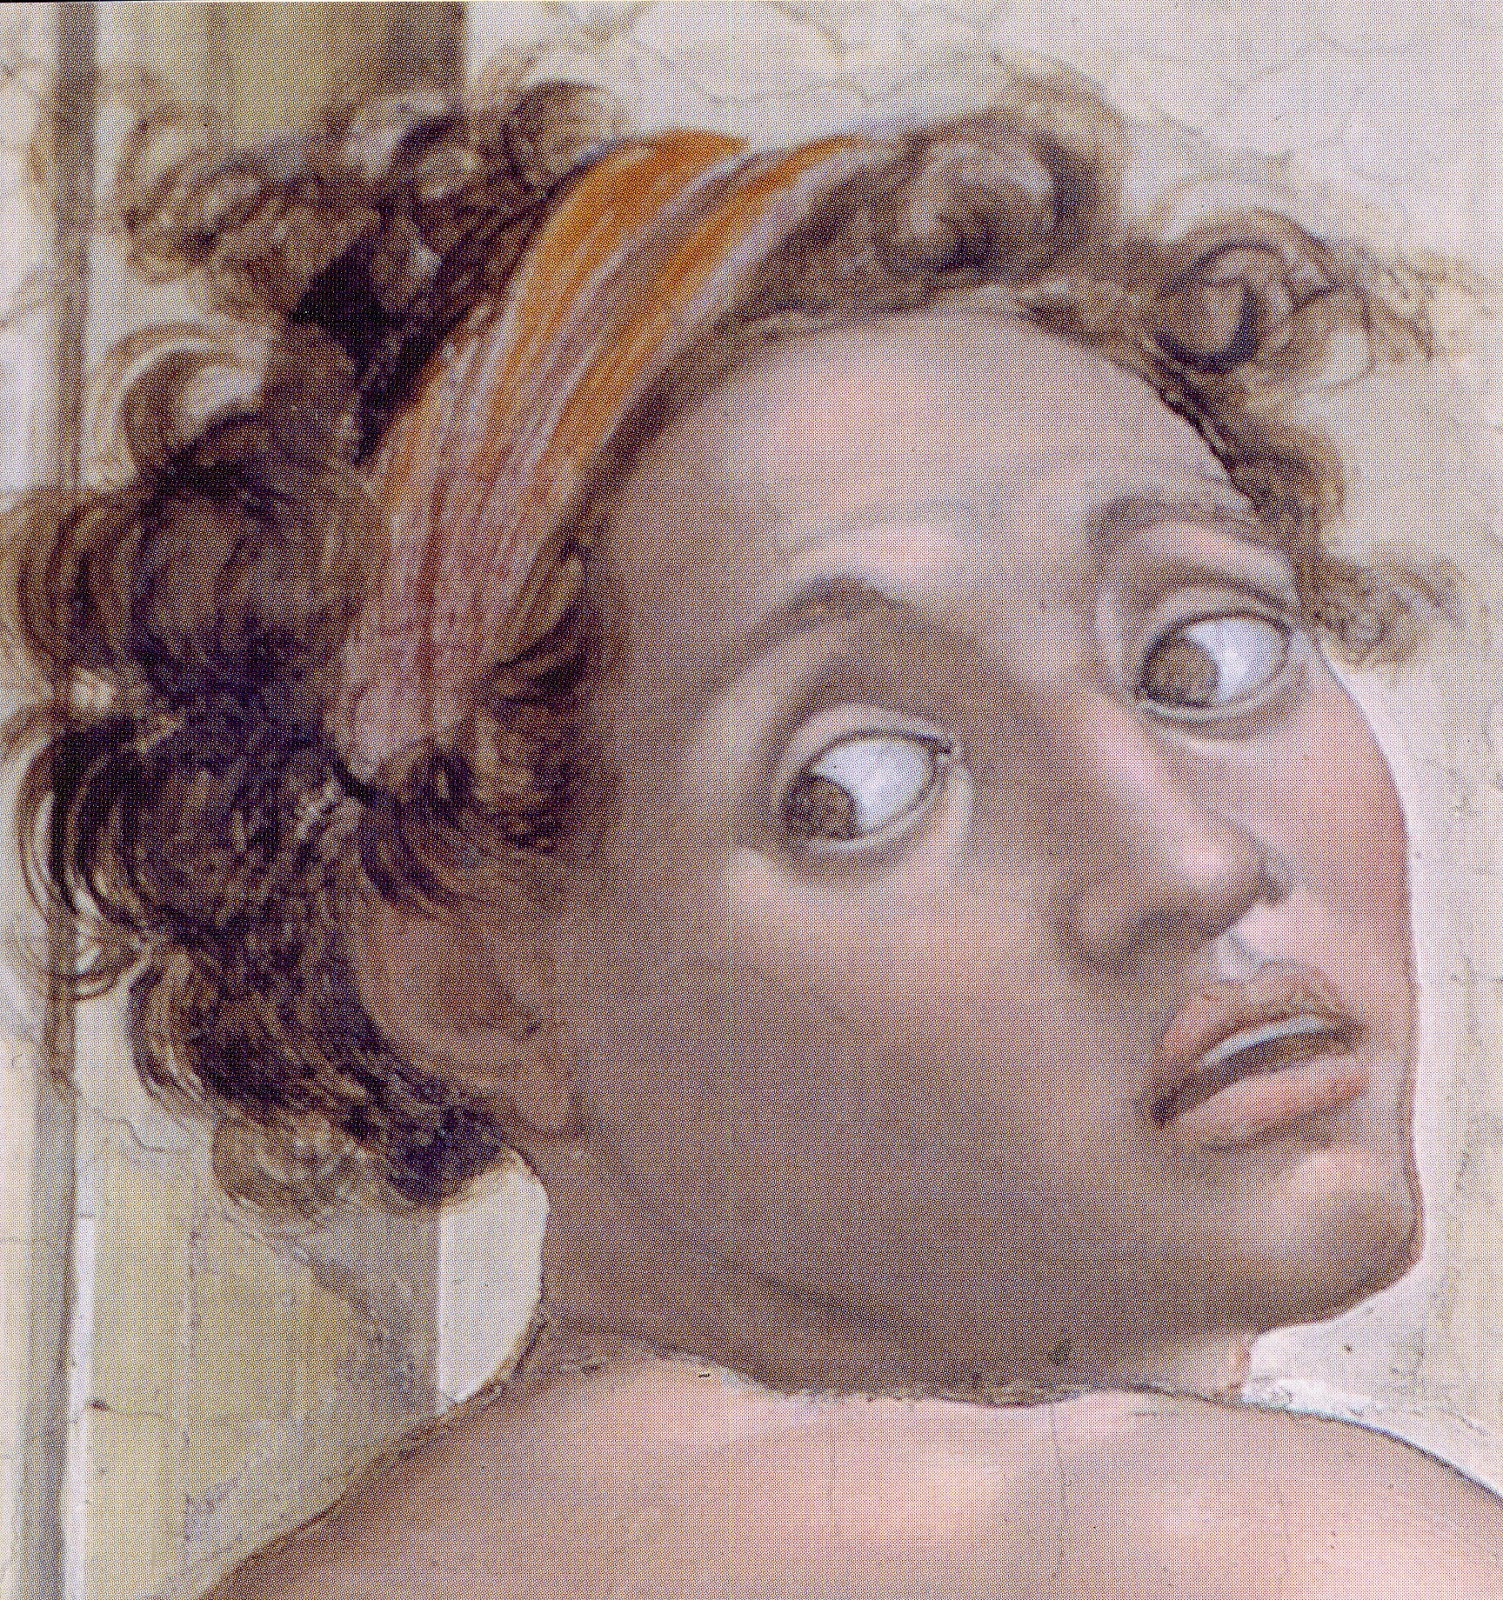 Michelangelo+Buonarroti-1475-1564 (254).jpg